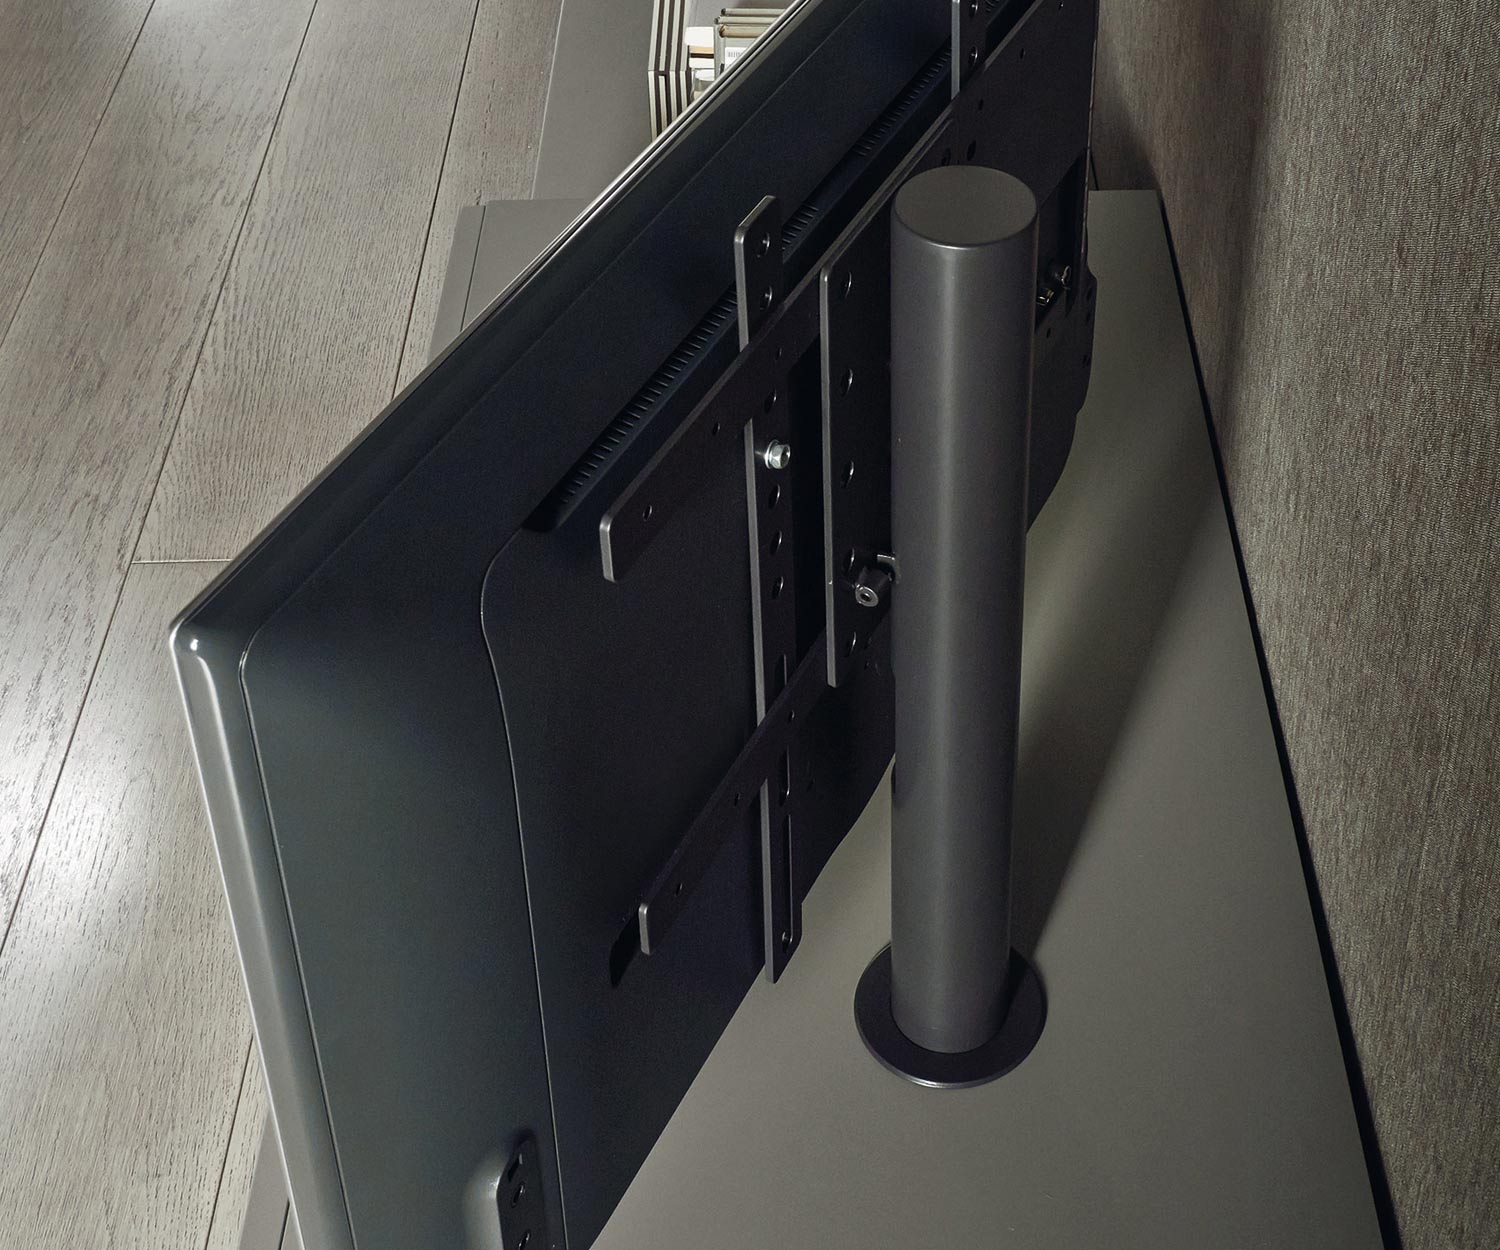 Moderner Livitalia Design Design Lowboard Konfigurator drehbare TV Halterung Säule Kabel integriert